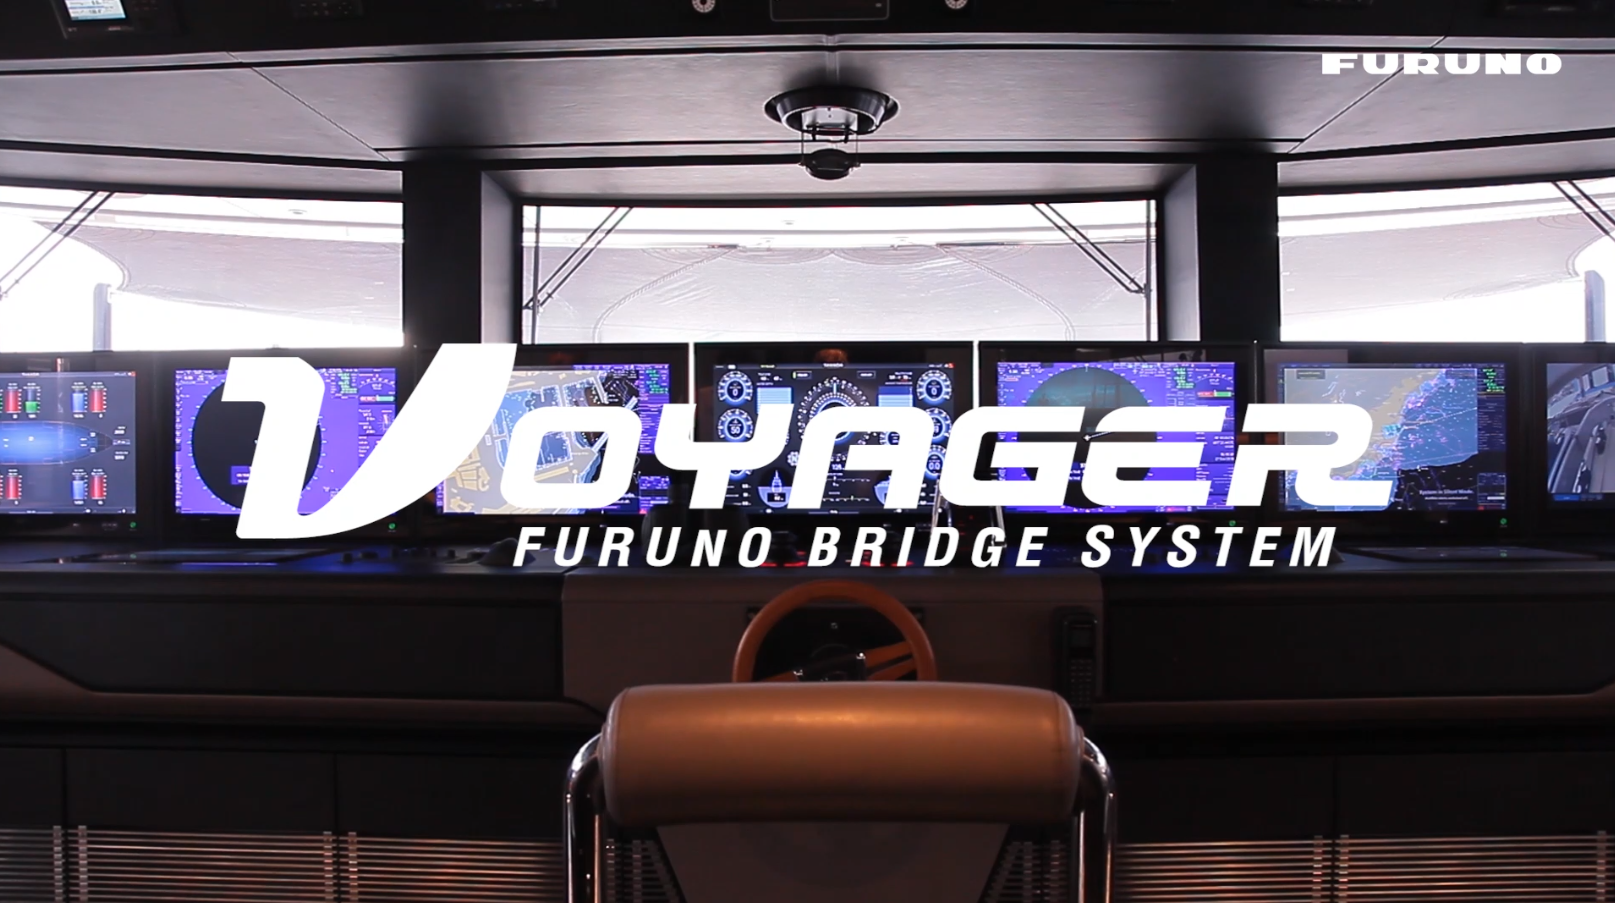 Voyager Bridge